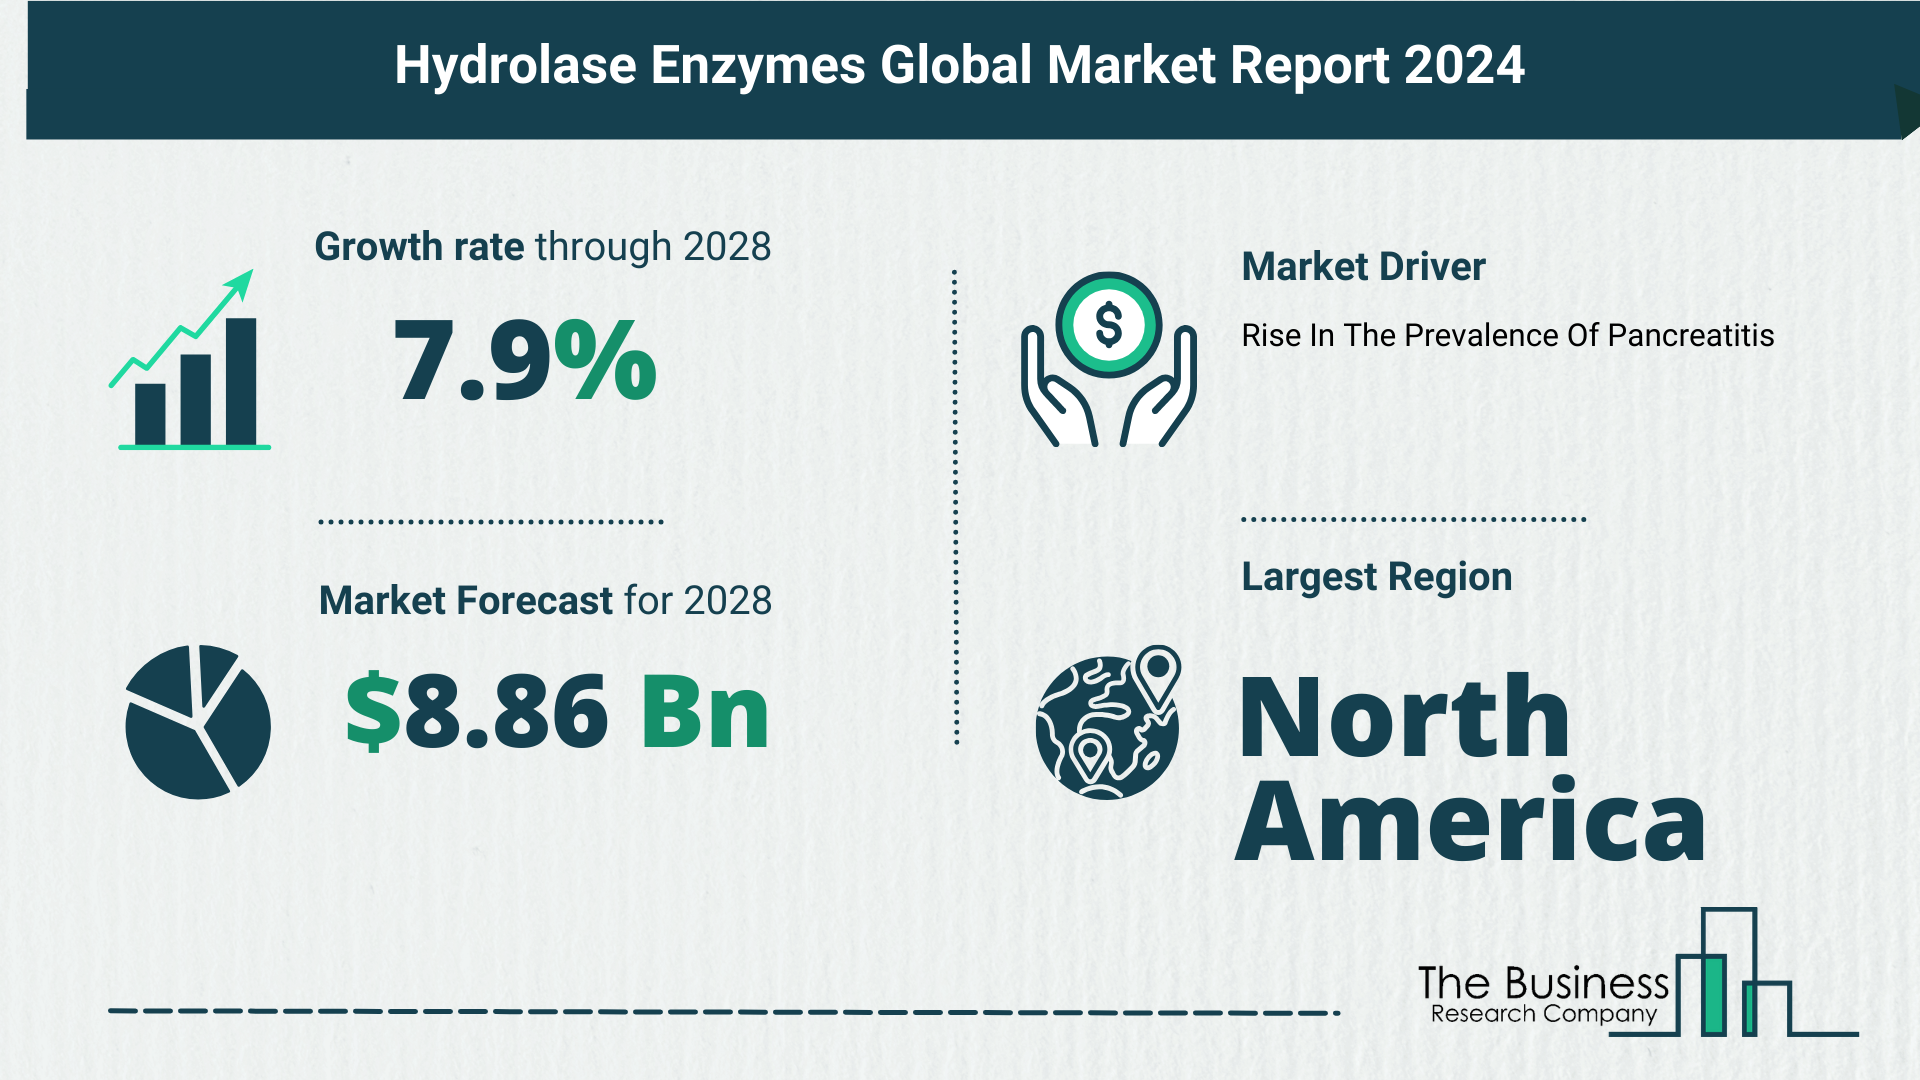 Global Hydrolase Enzymes Market